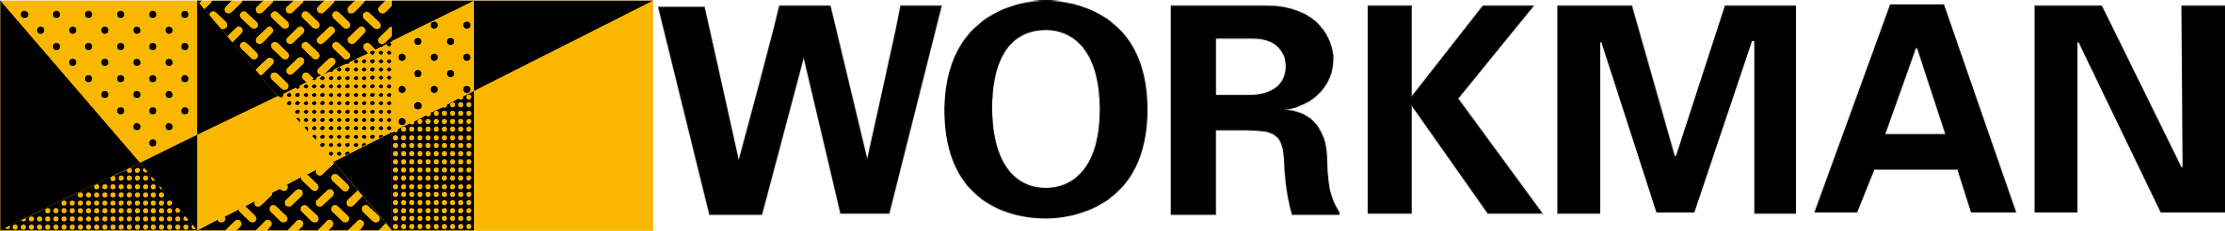 Workman logo large (transparent PNG)